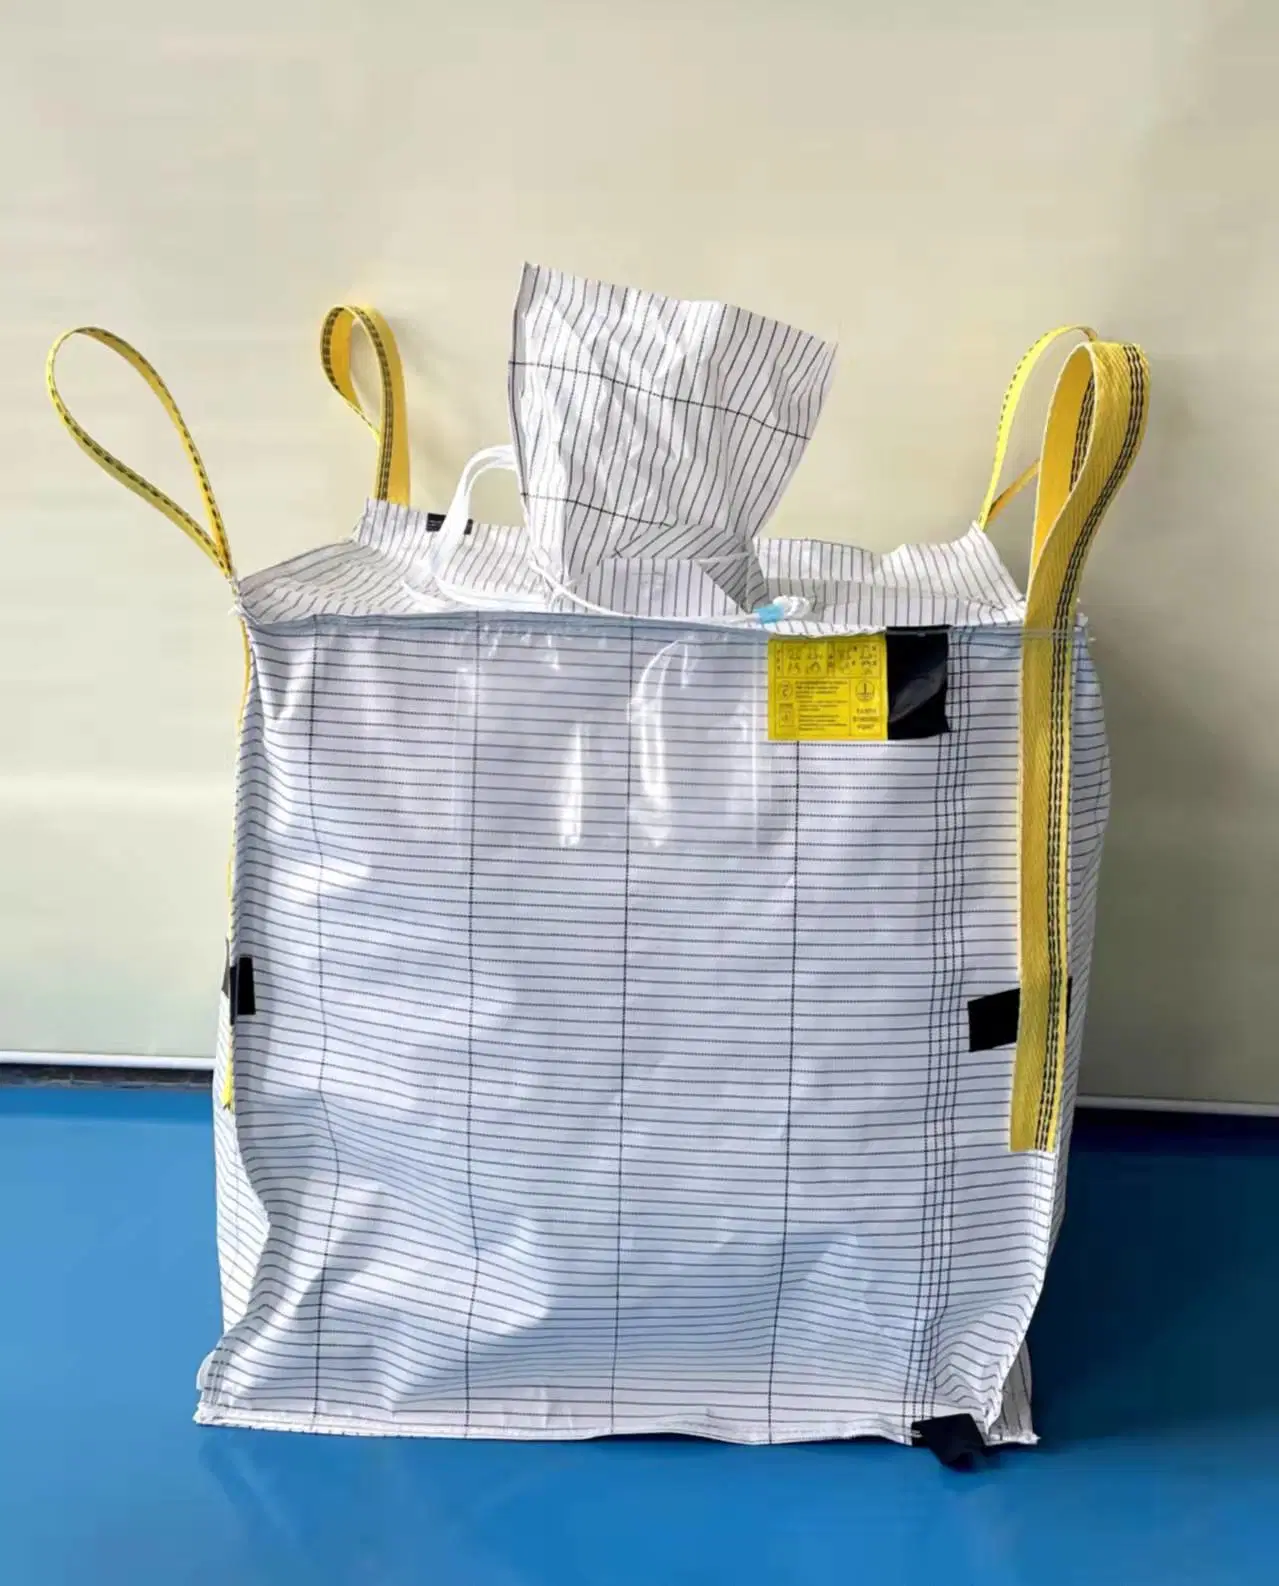 FIBC Big Bag for Sulphur with Un Certification, Dangerous Goods Packaging Bags